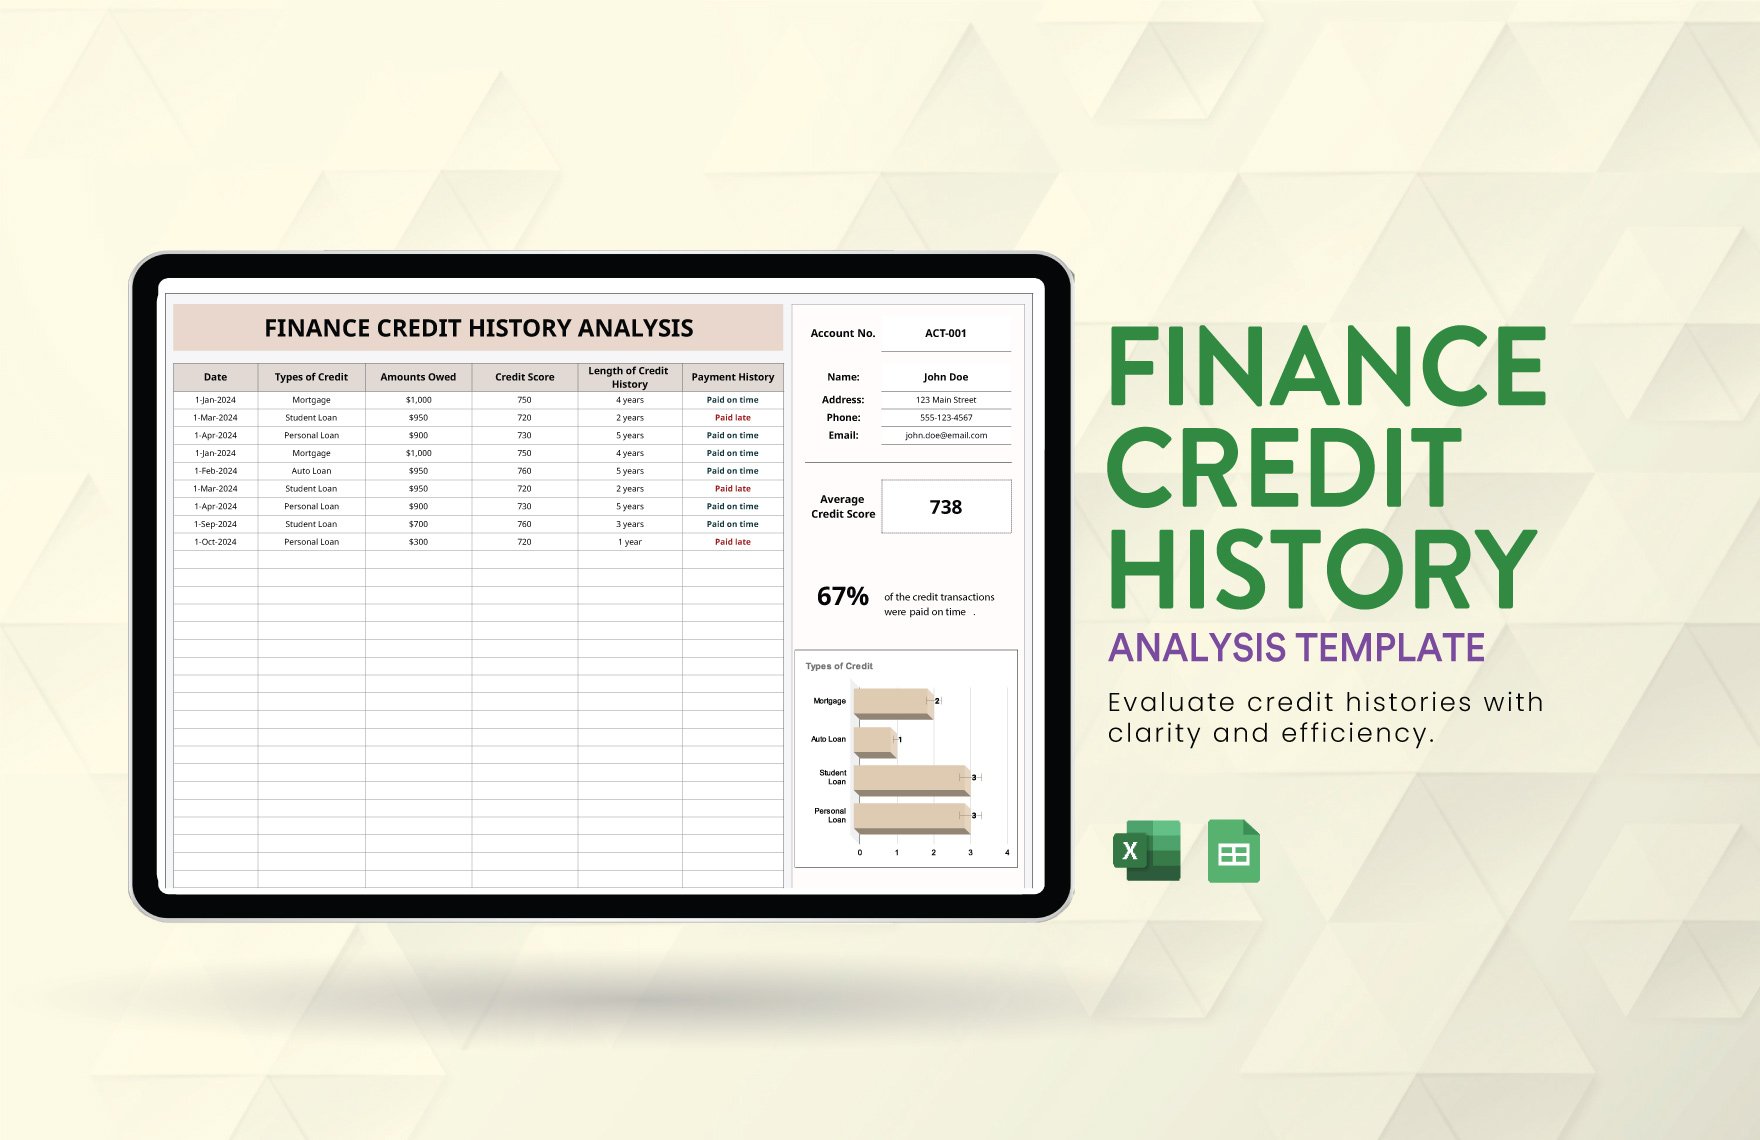 Finance Credit History Analysis Template